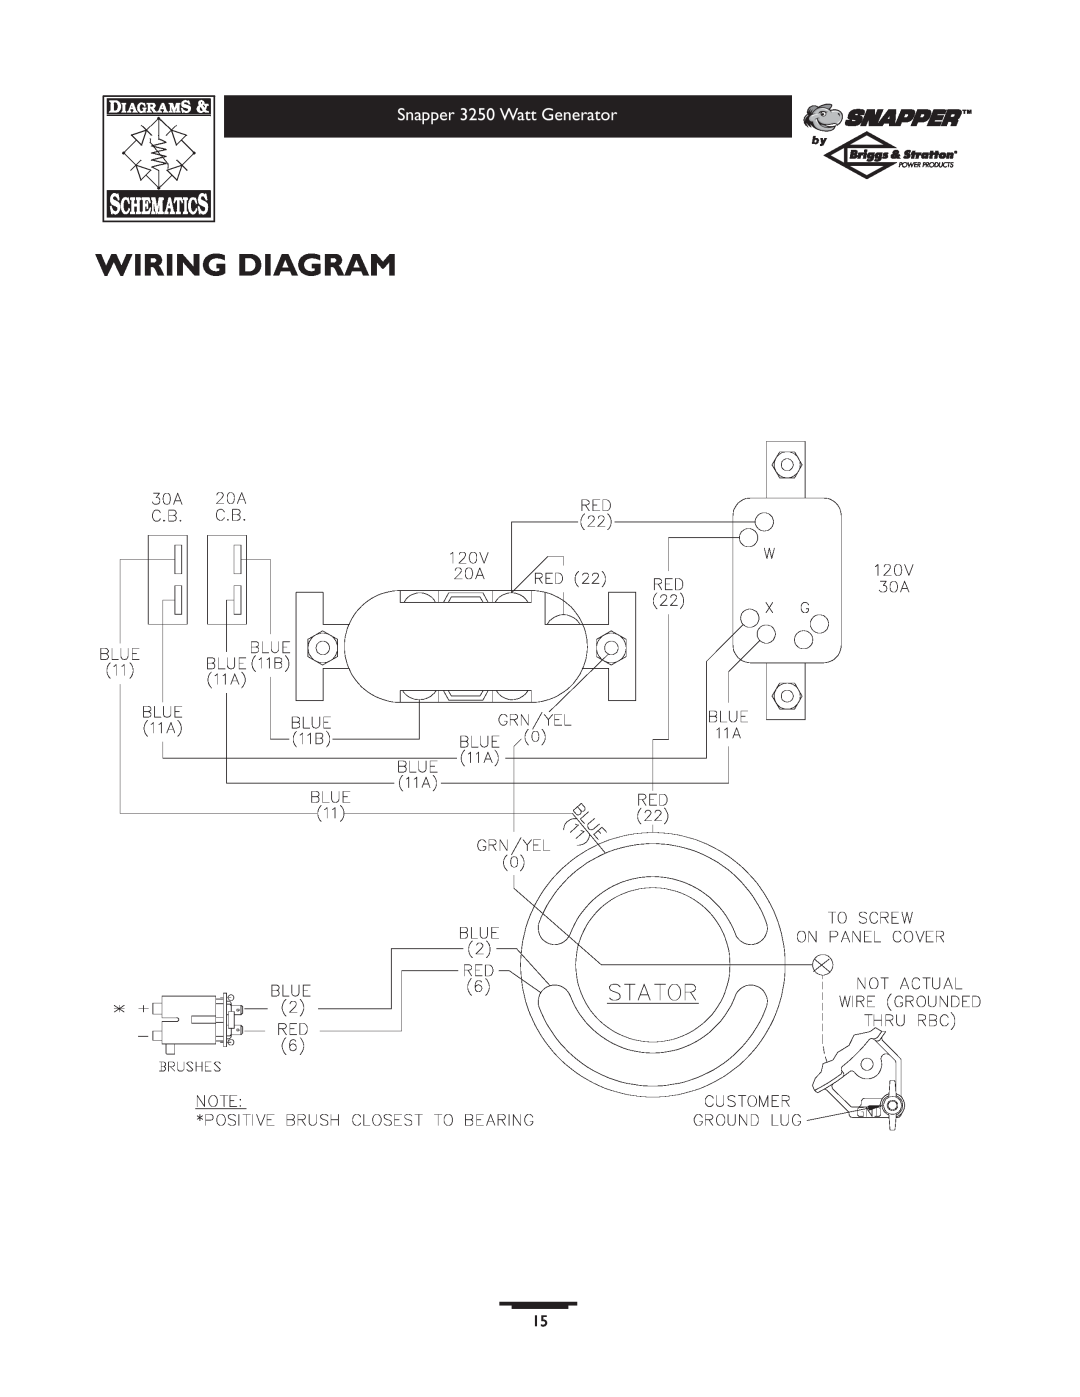 Snapper owner manual Wiring Diagram, Snapper 3250 Watt Generator 